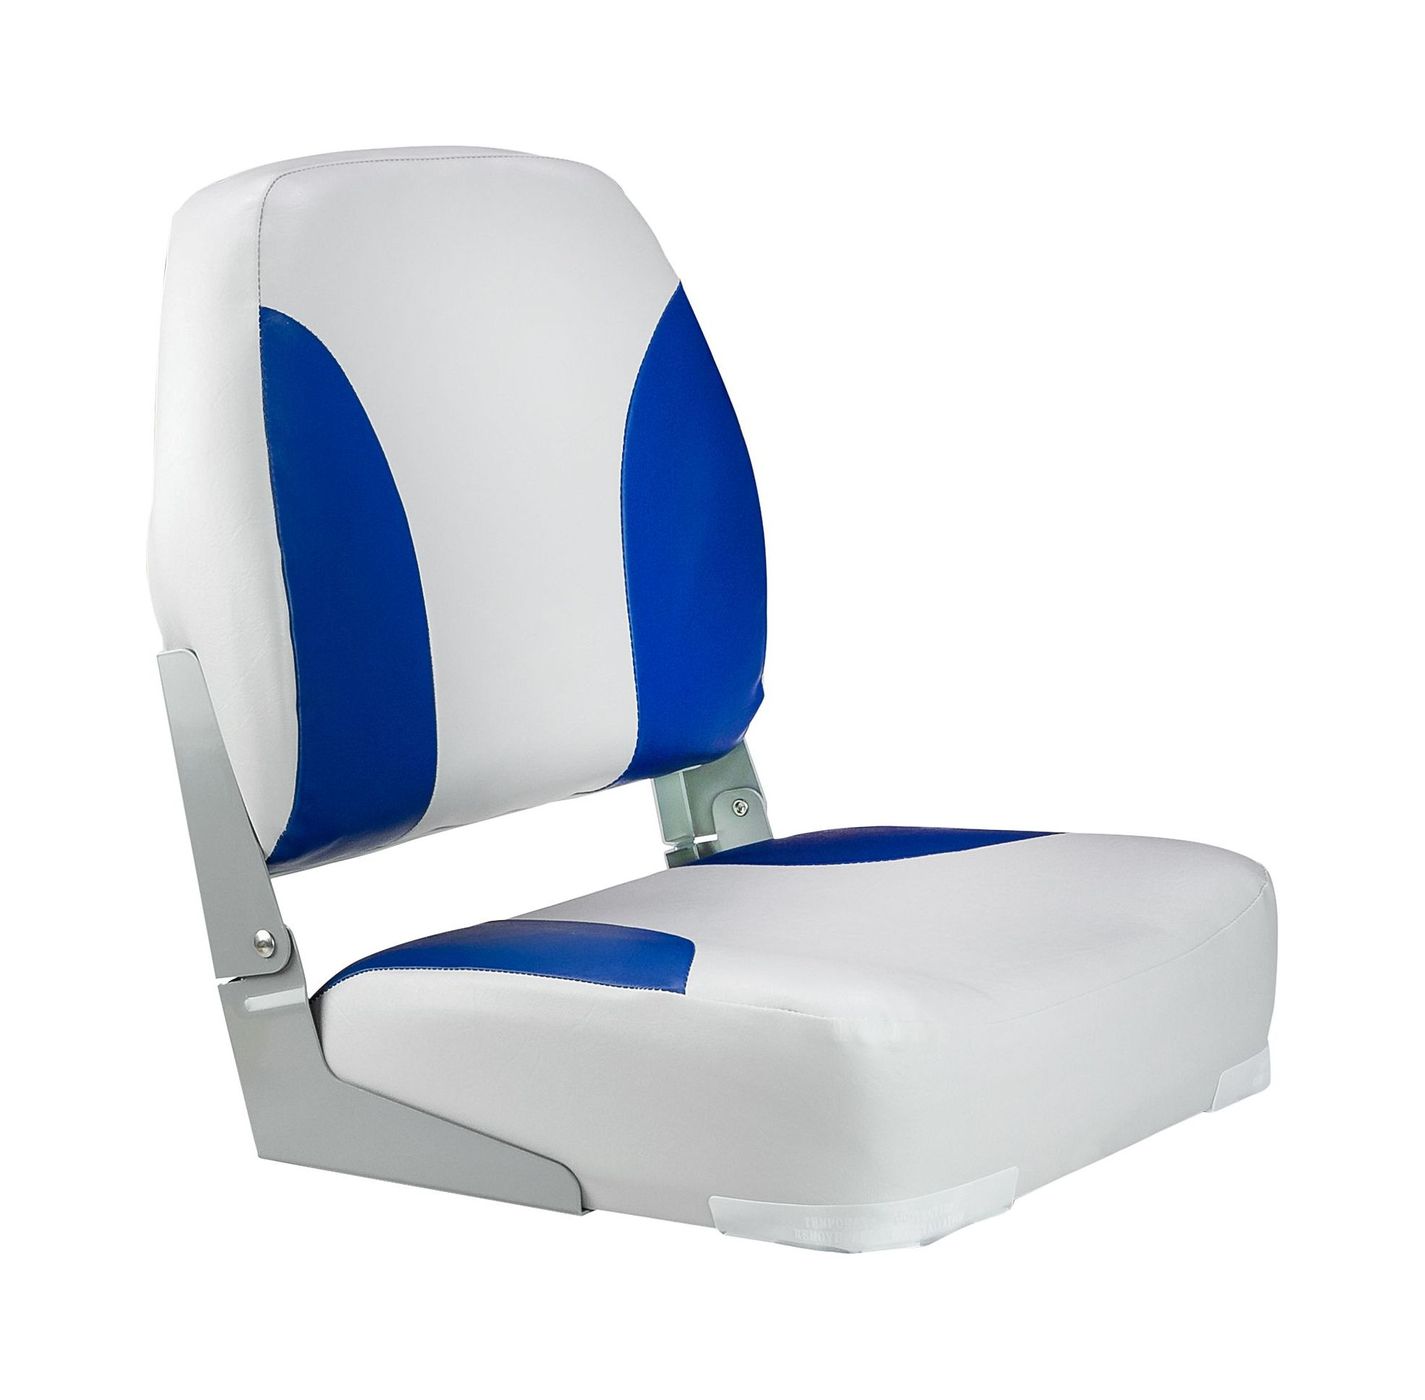 Кресло мягкое складное Classic, обивка винил, цвет серый/синий, Marine Rocket 75102GB-MR кресло мягкое складное deluxe обивка винил белый синий marine rocket 75137wb mr